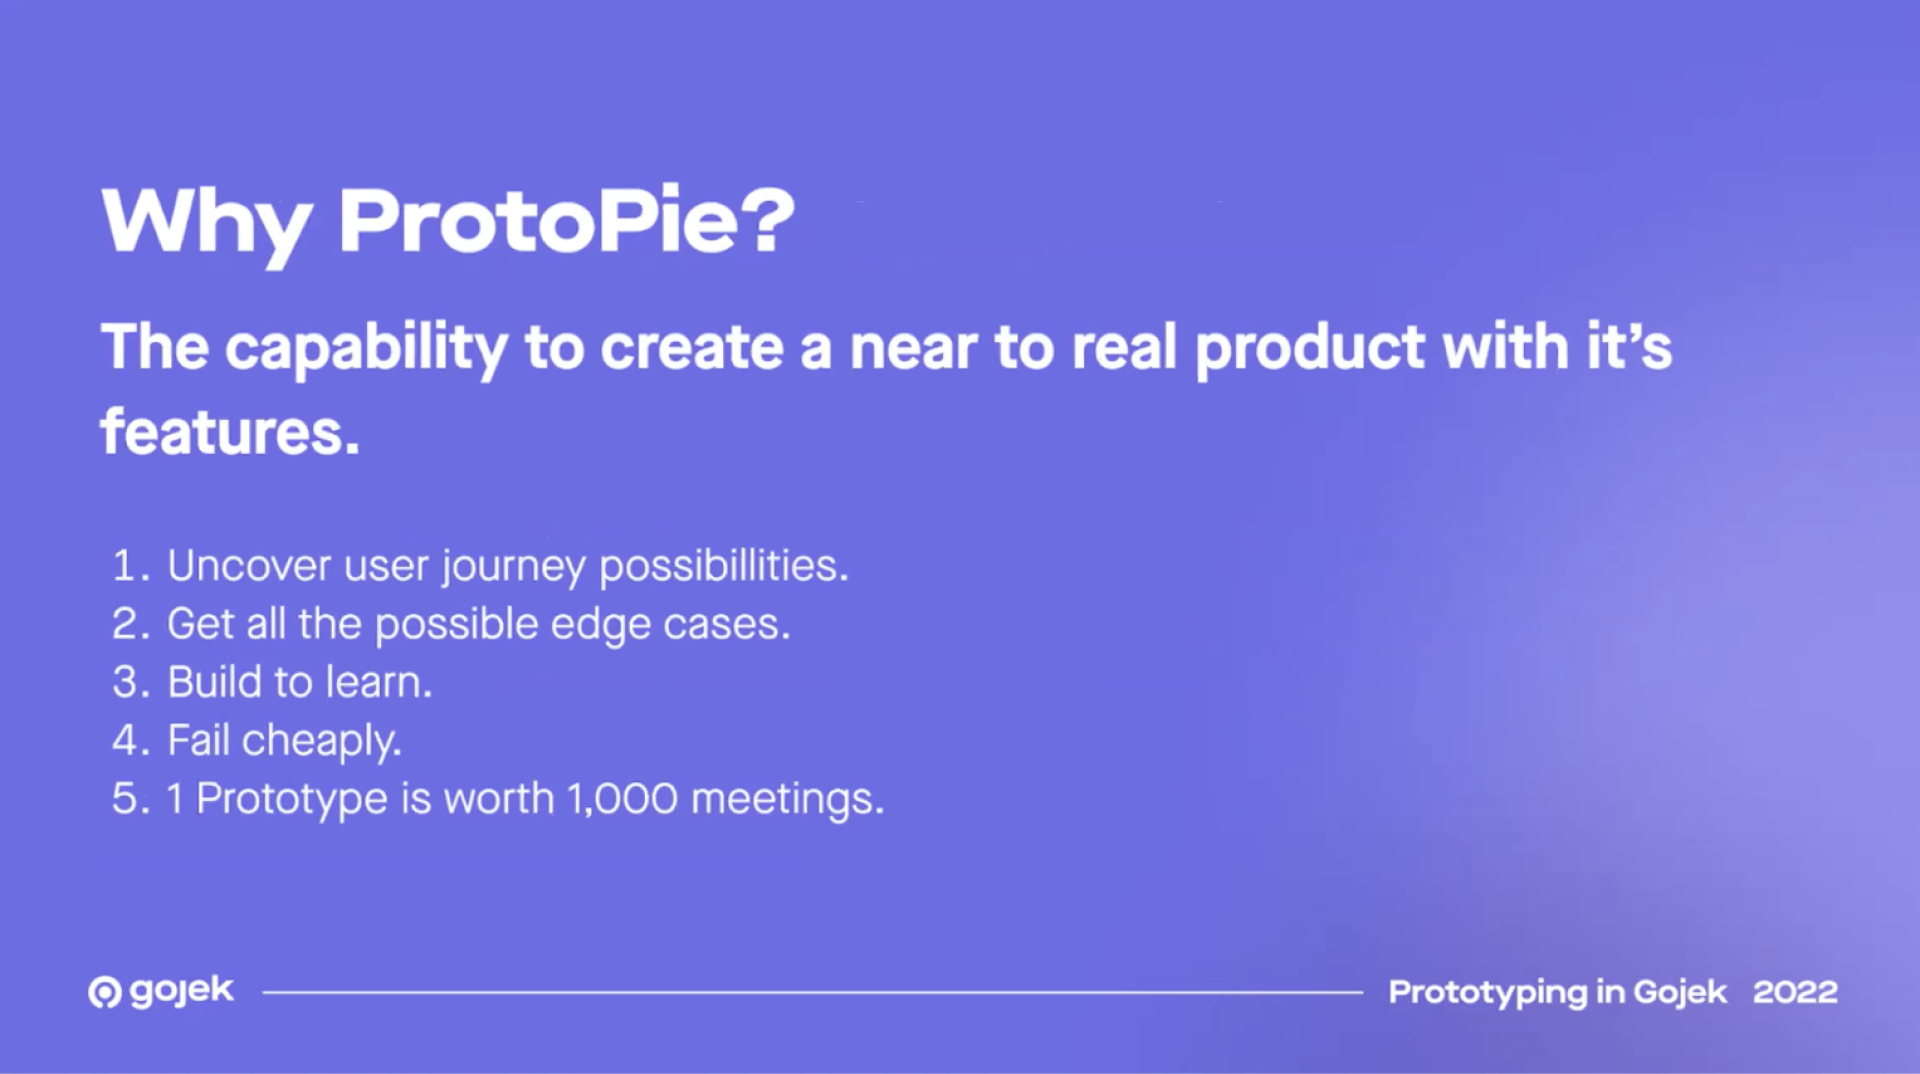 Why Gojek design teams love ProtoPie